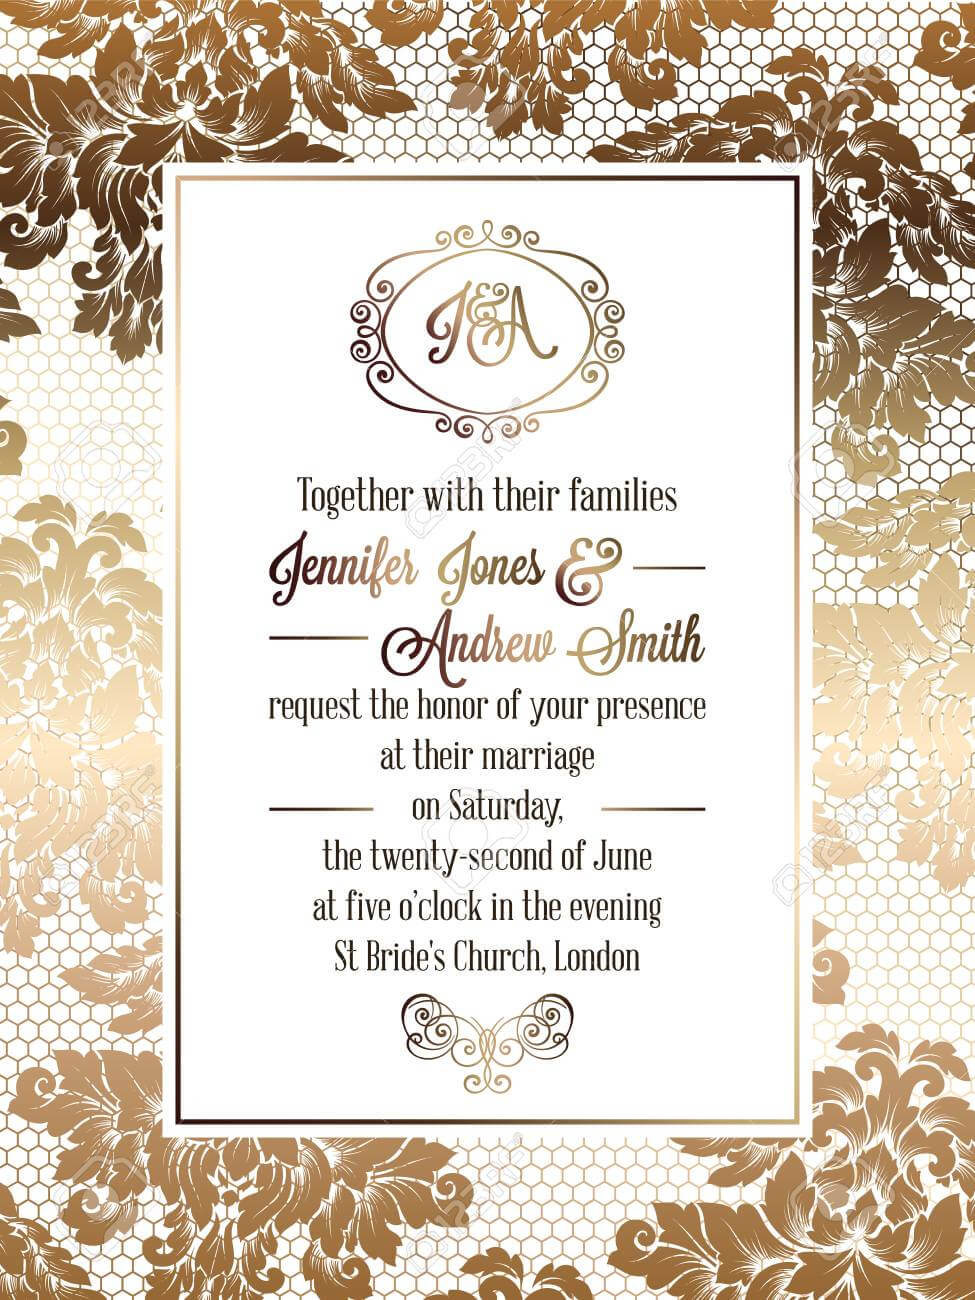 Vintage Baroque Style Wedding Invitation Card Template.. Elegant.. Within Free E Wedding Invitation Card Templates